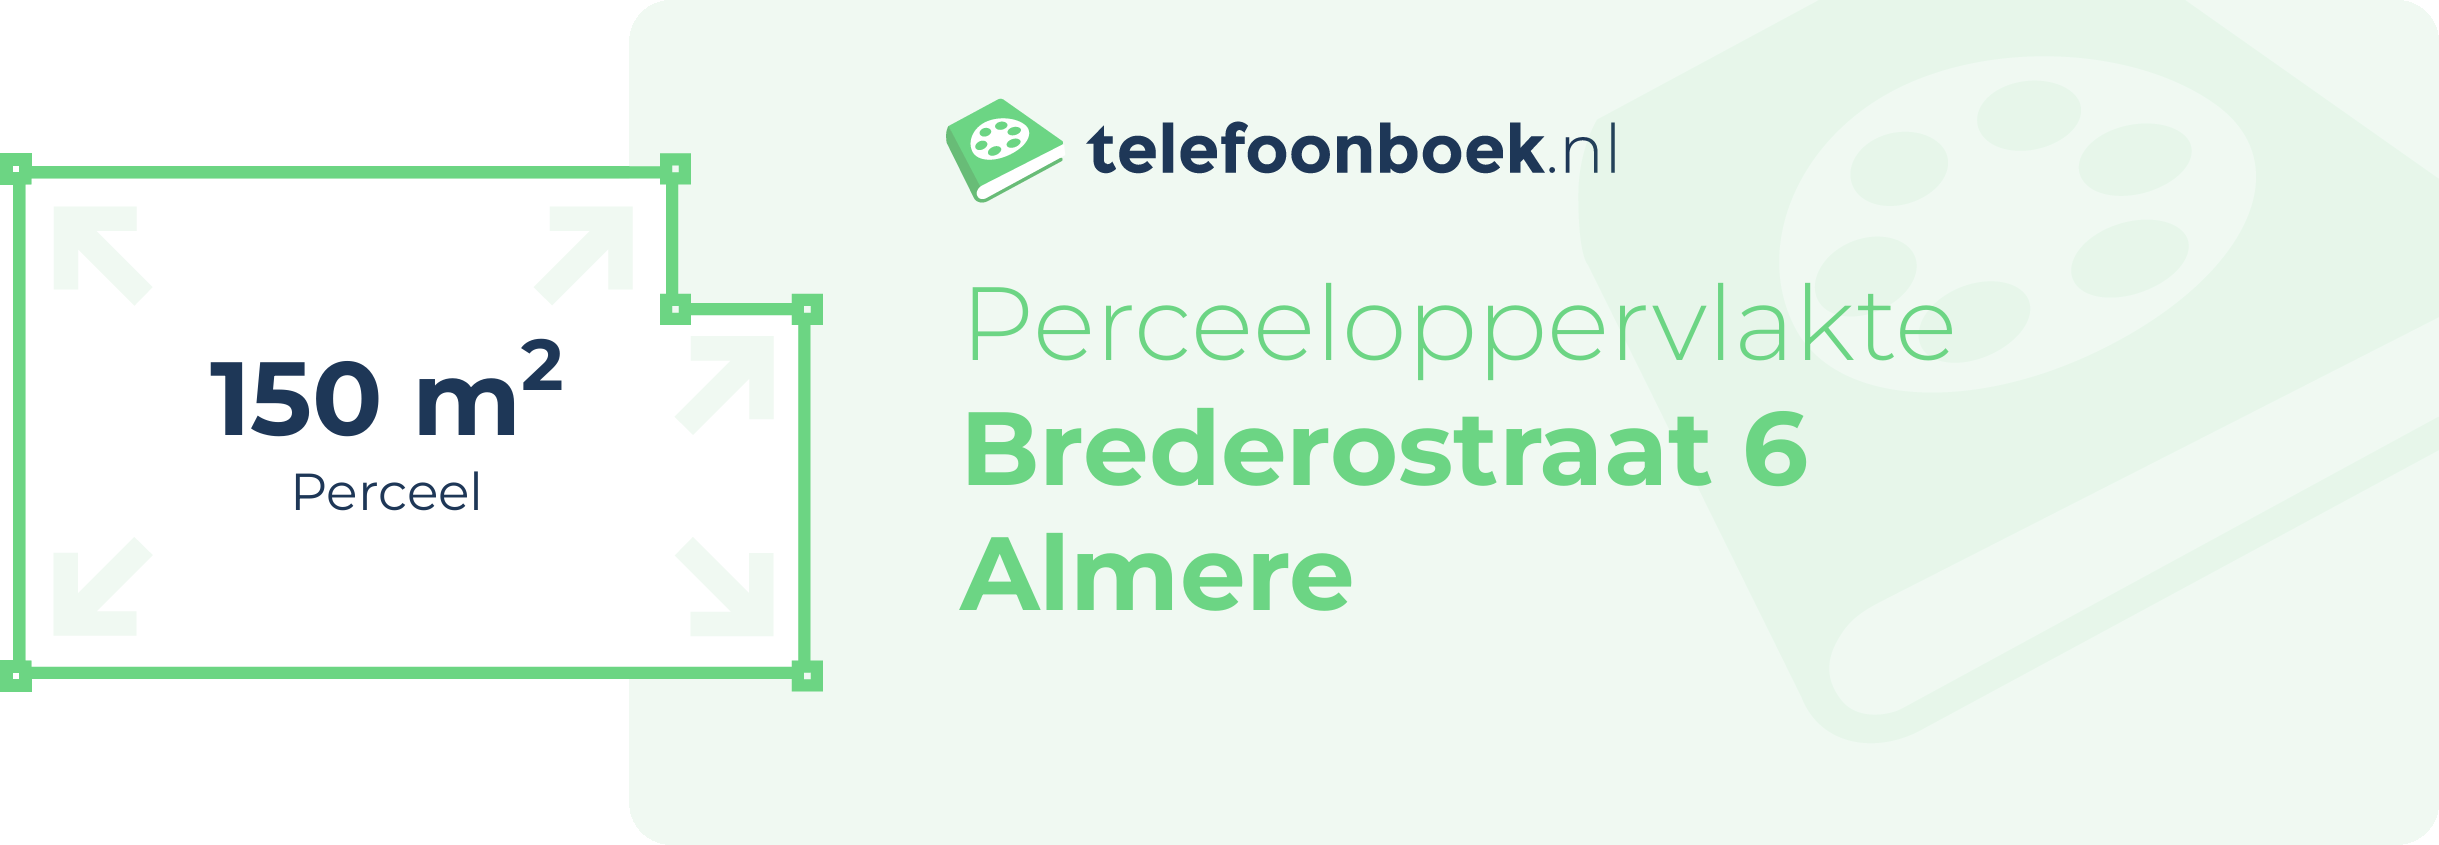 Perceeloppervlakte Brederostraat 6 Almere